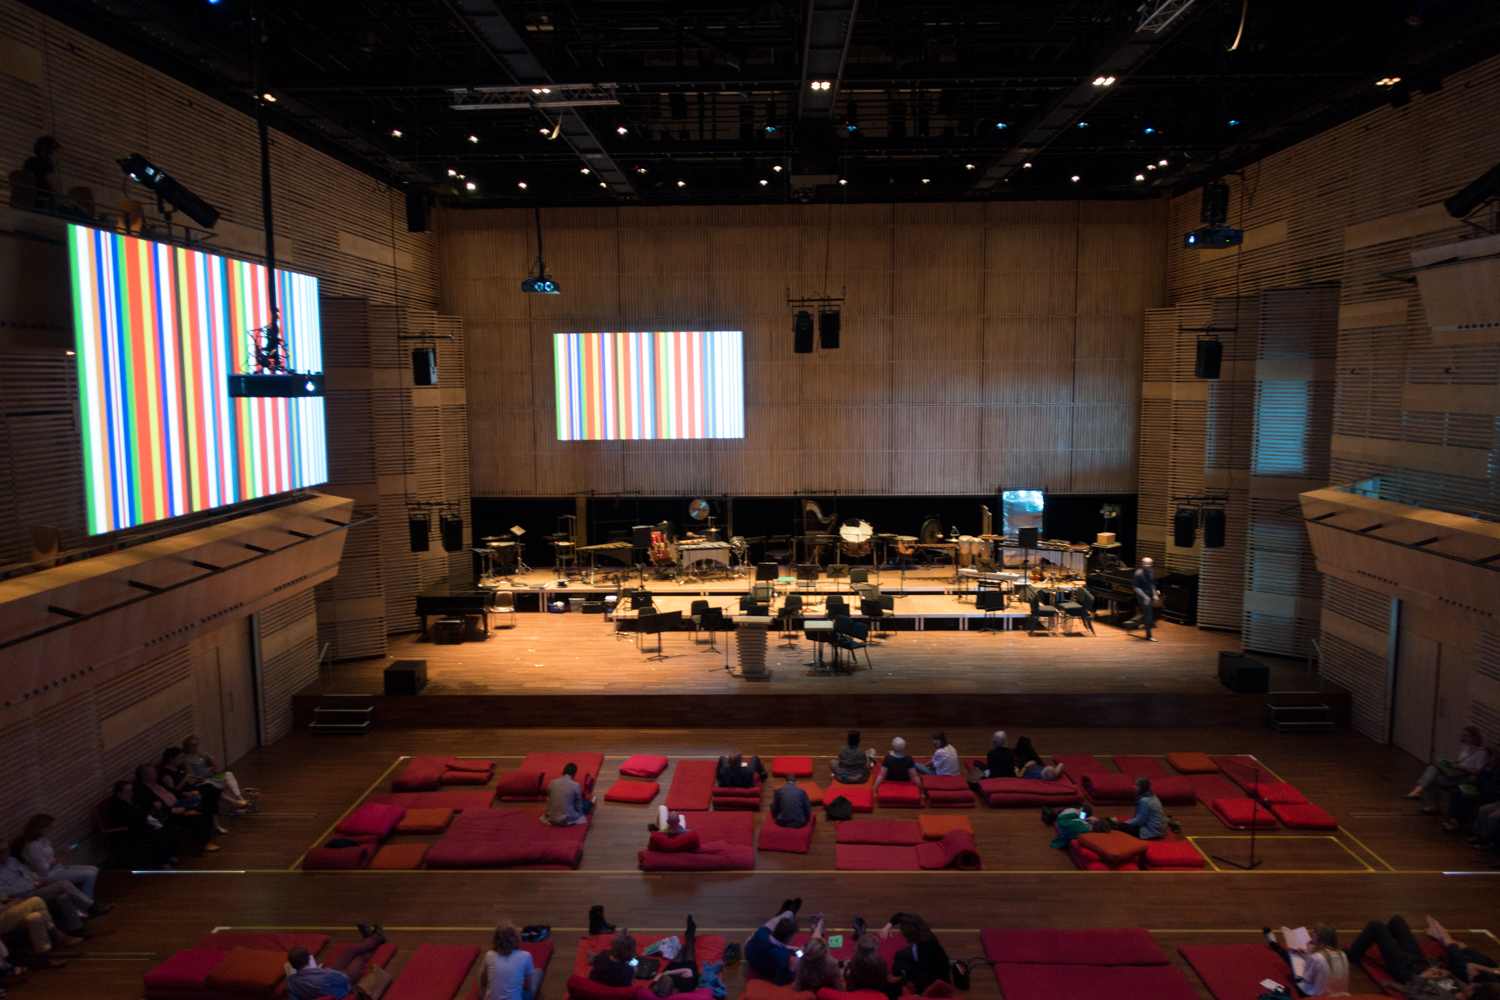   Rem Koolhaas's barcode EU flag decorates the inside the Muziekgebouw's main hall during Urbo Kune.&nbsp;  Photo by Canan Marasligil  